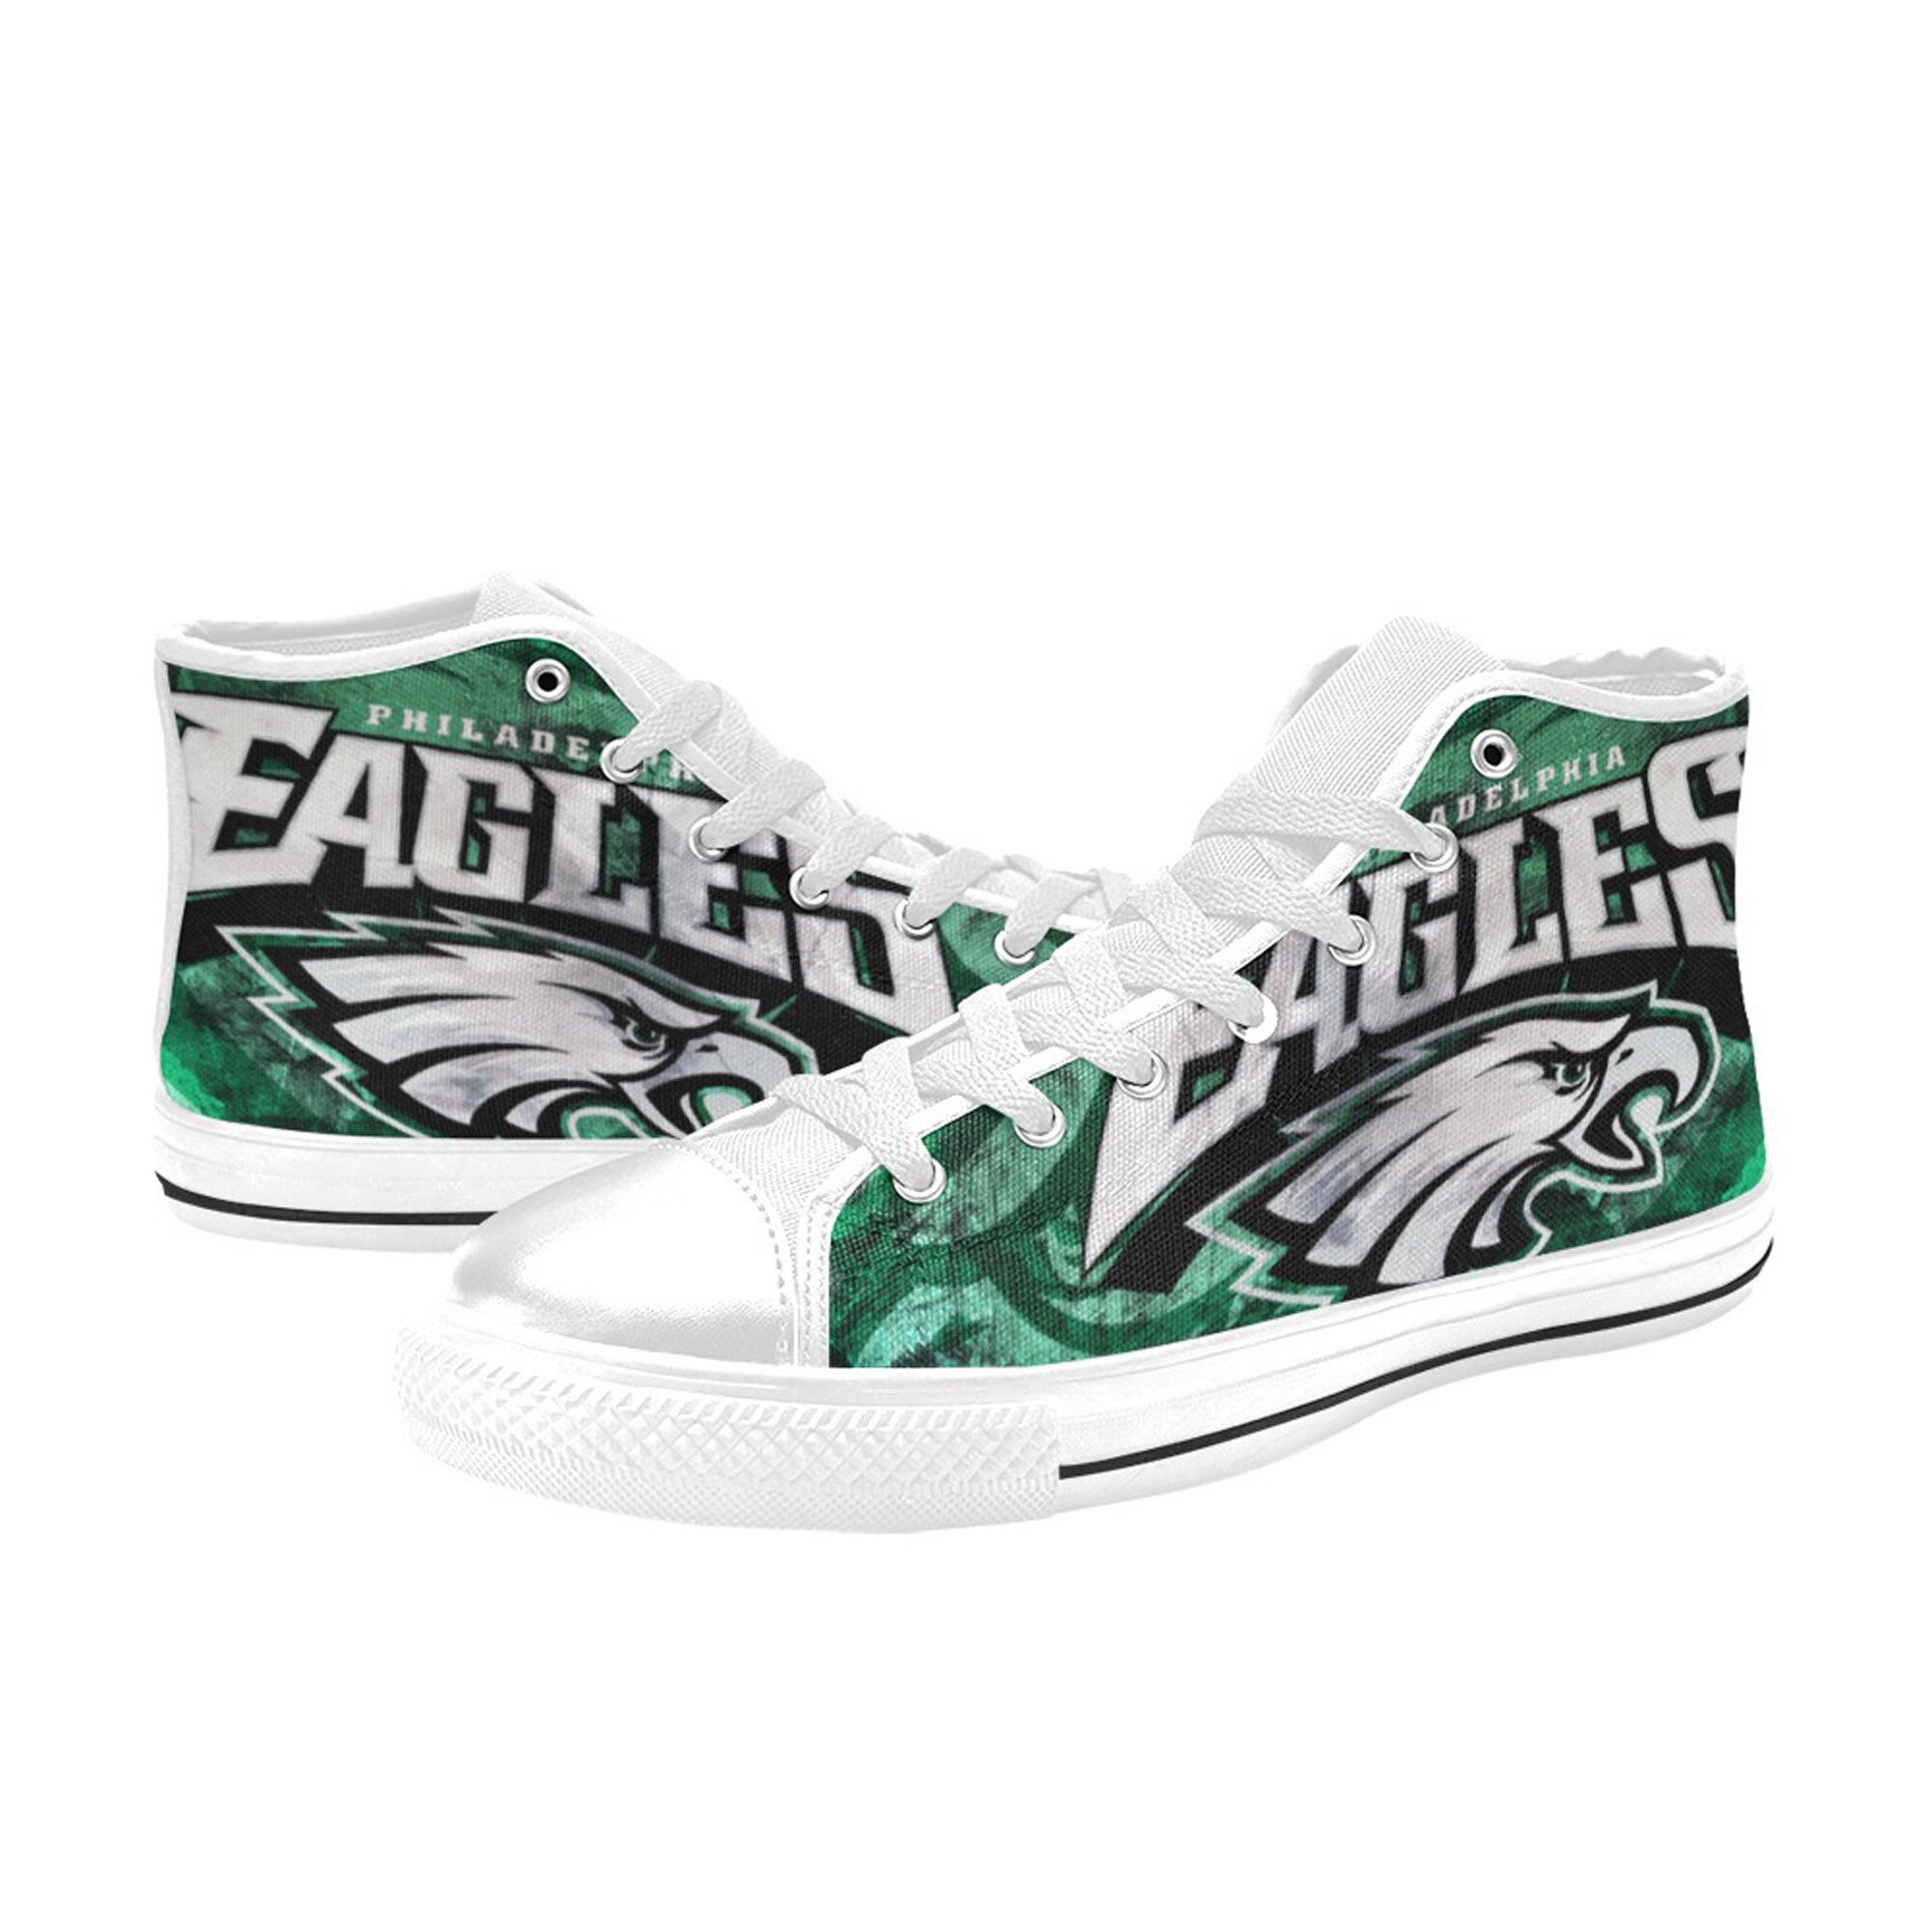 Philadelphia Eagles themed custom shoes sneakers for fan | Etsy